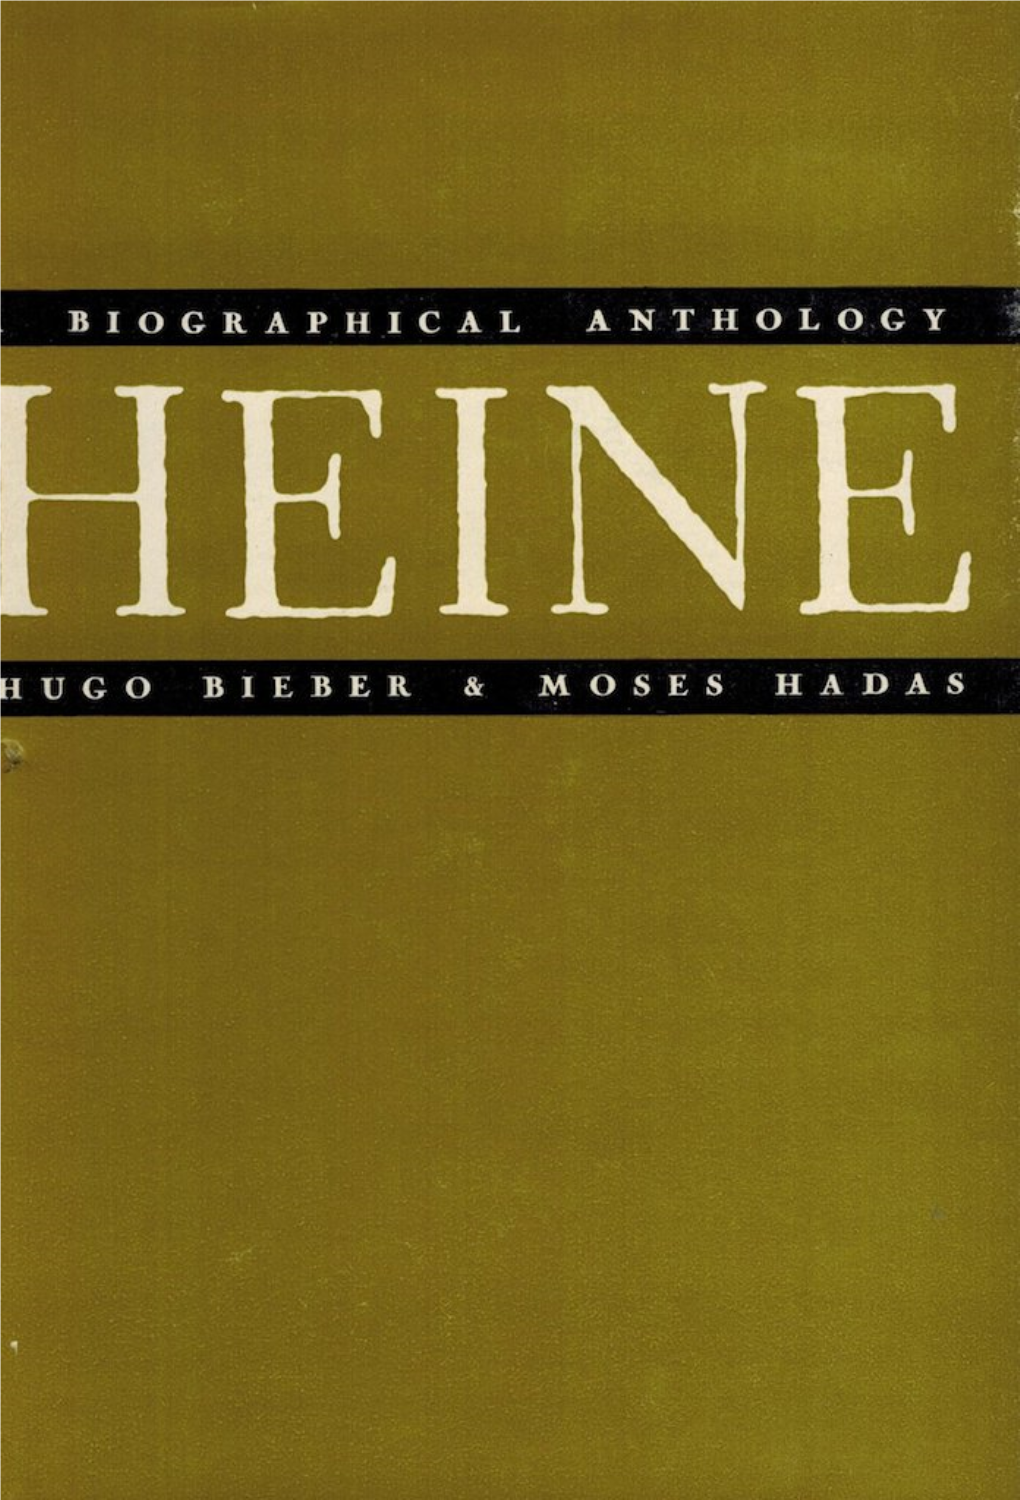 Heinrich Heine: a Biographical Anthology